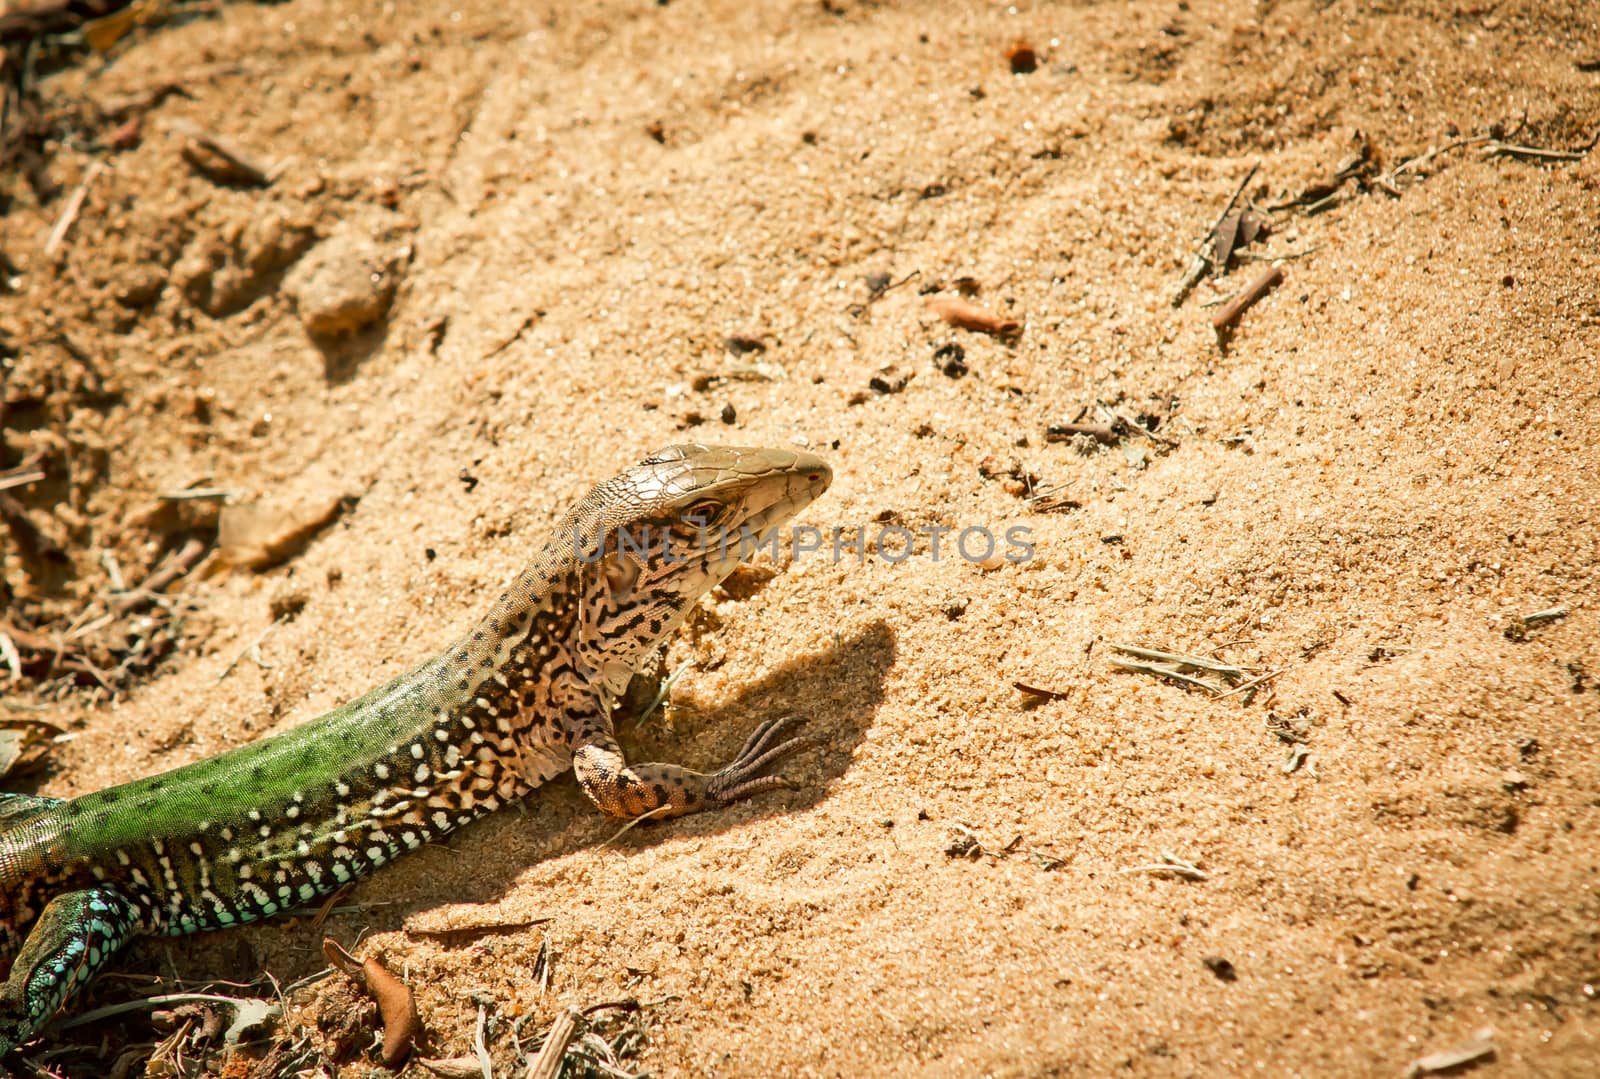 Lizard on the sand by gigiobbr